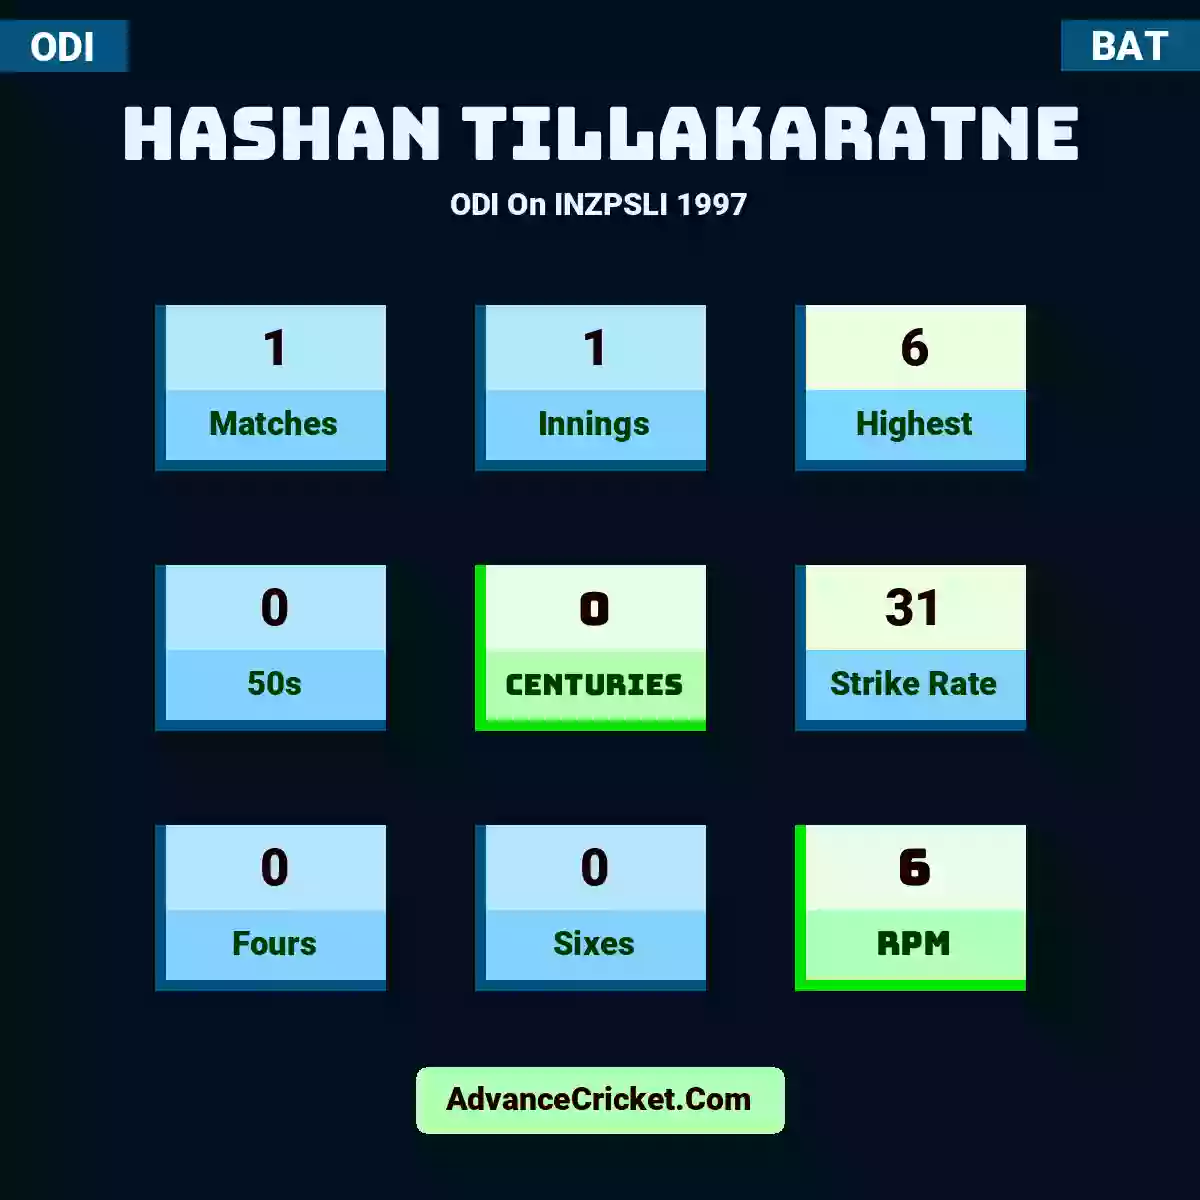 Hashan Tillakaratne ODI  On INZPSLI 1997, Hashan Tillakaratne played 1 matches, scored 6 runs as highest, 0 half-centuries, and 0 centuries, with a strike rate of 31. H.Tillakaratne hit 0 fours and 0 sixes, with an RPM of 6.